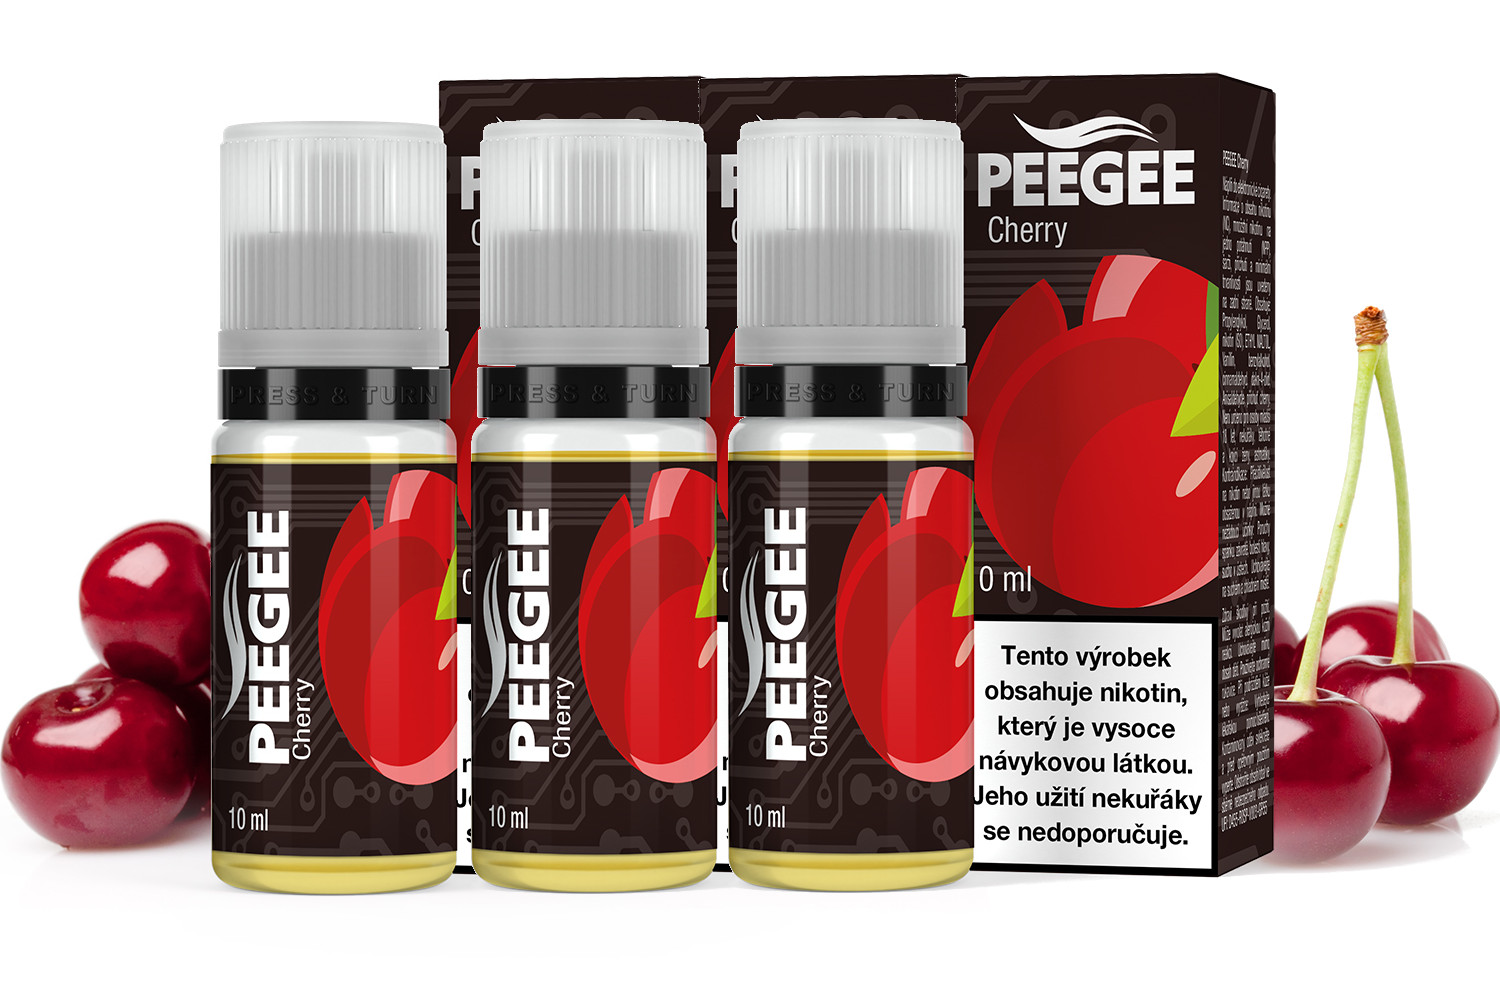 PEEGEE - Višeň (Cherry) 3x10ml Obsah nikotinu: 18mg